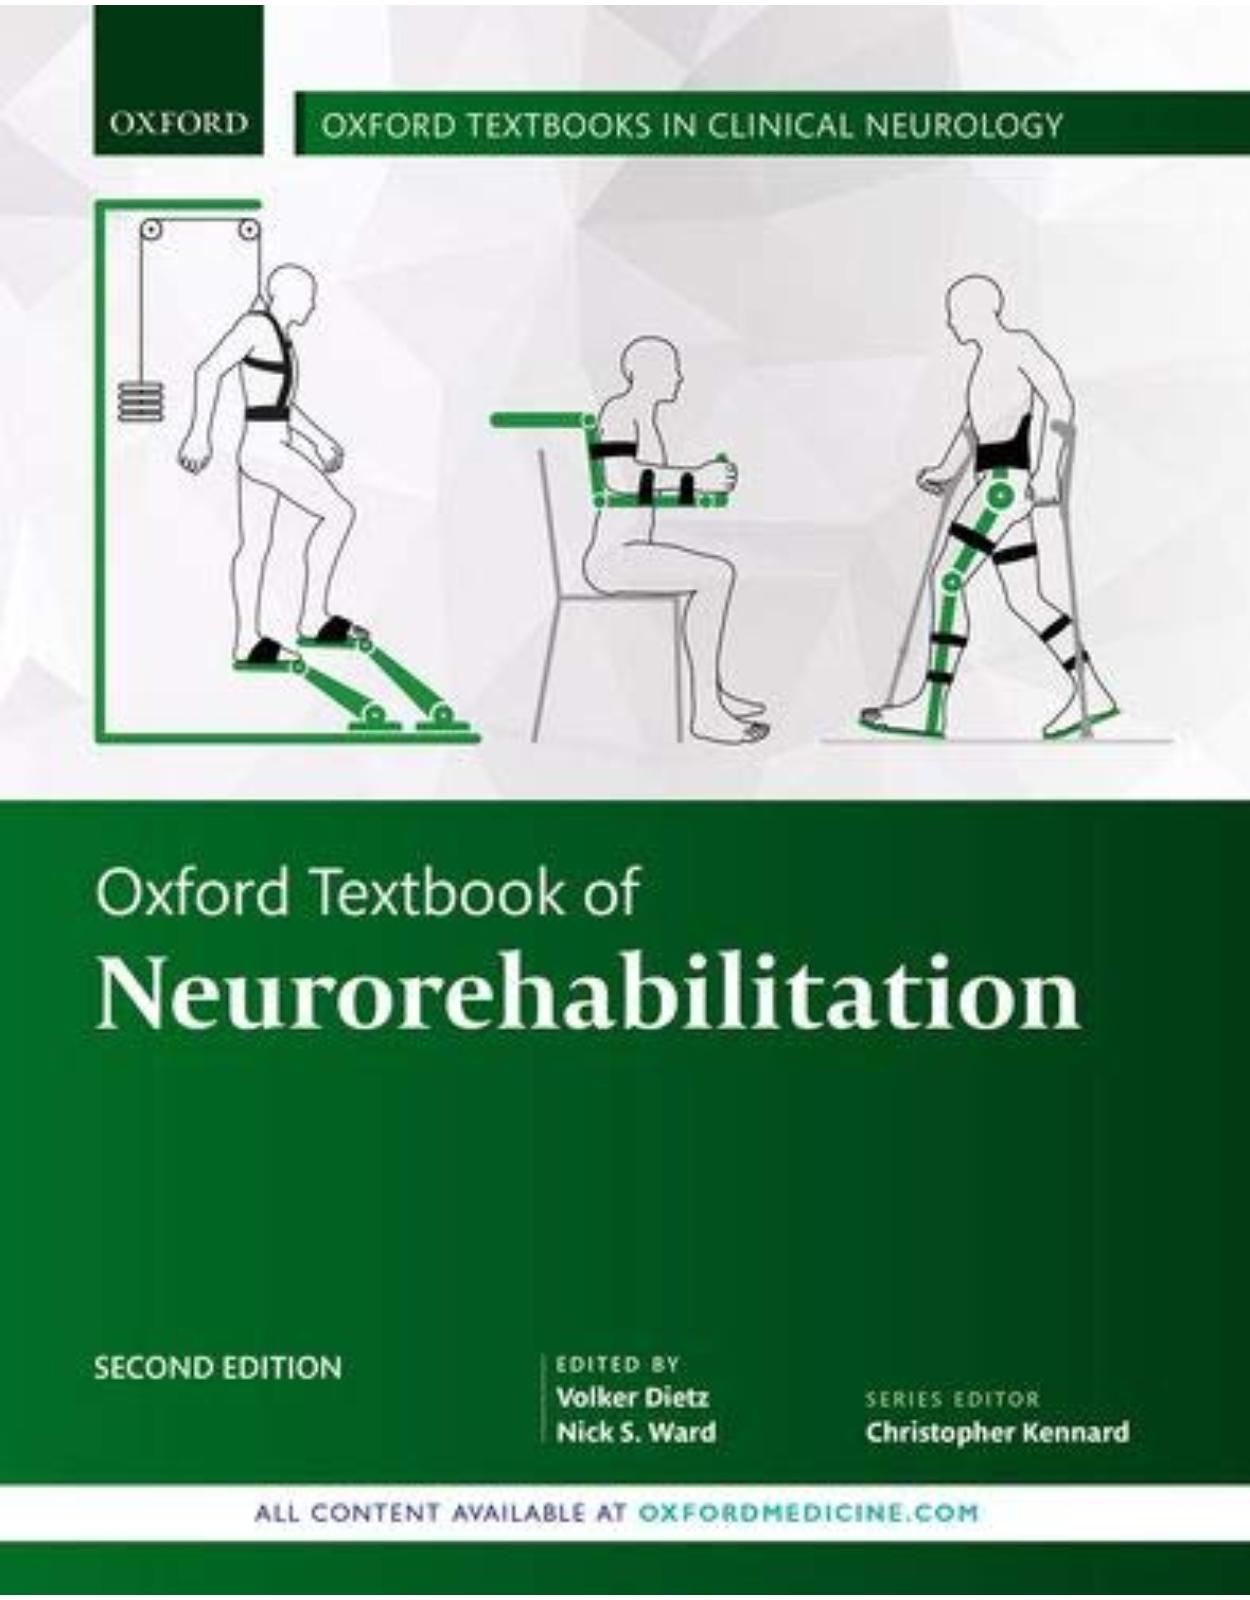 Oxford Textbook of Neurorehabilitation (Oxford Textbooks in Clinical Neurology) 